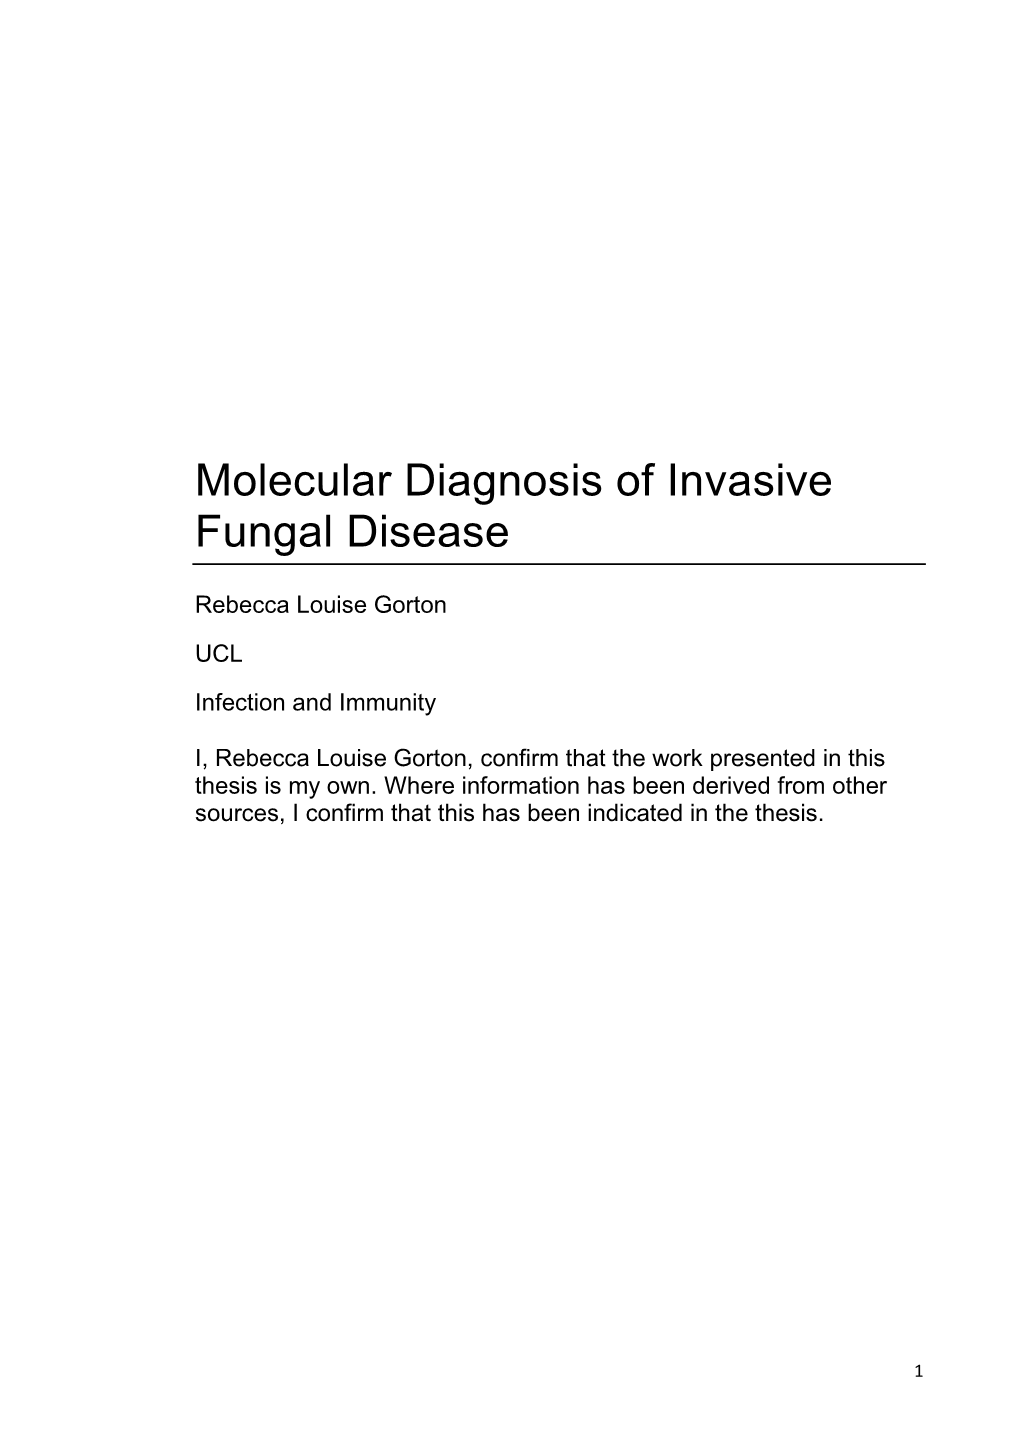 Molecular Diagnosis of Invasive Fungal Disease